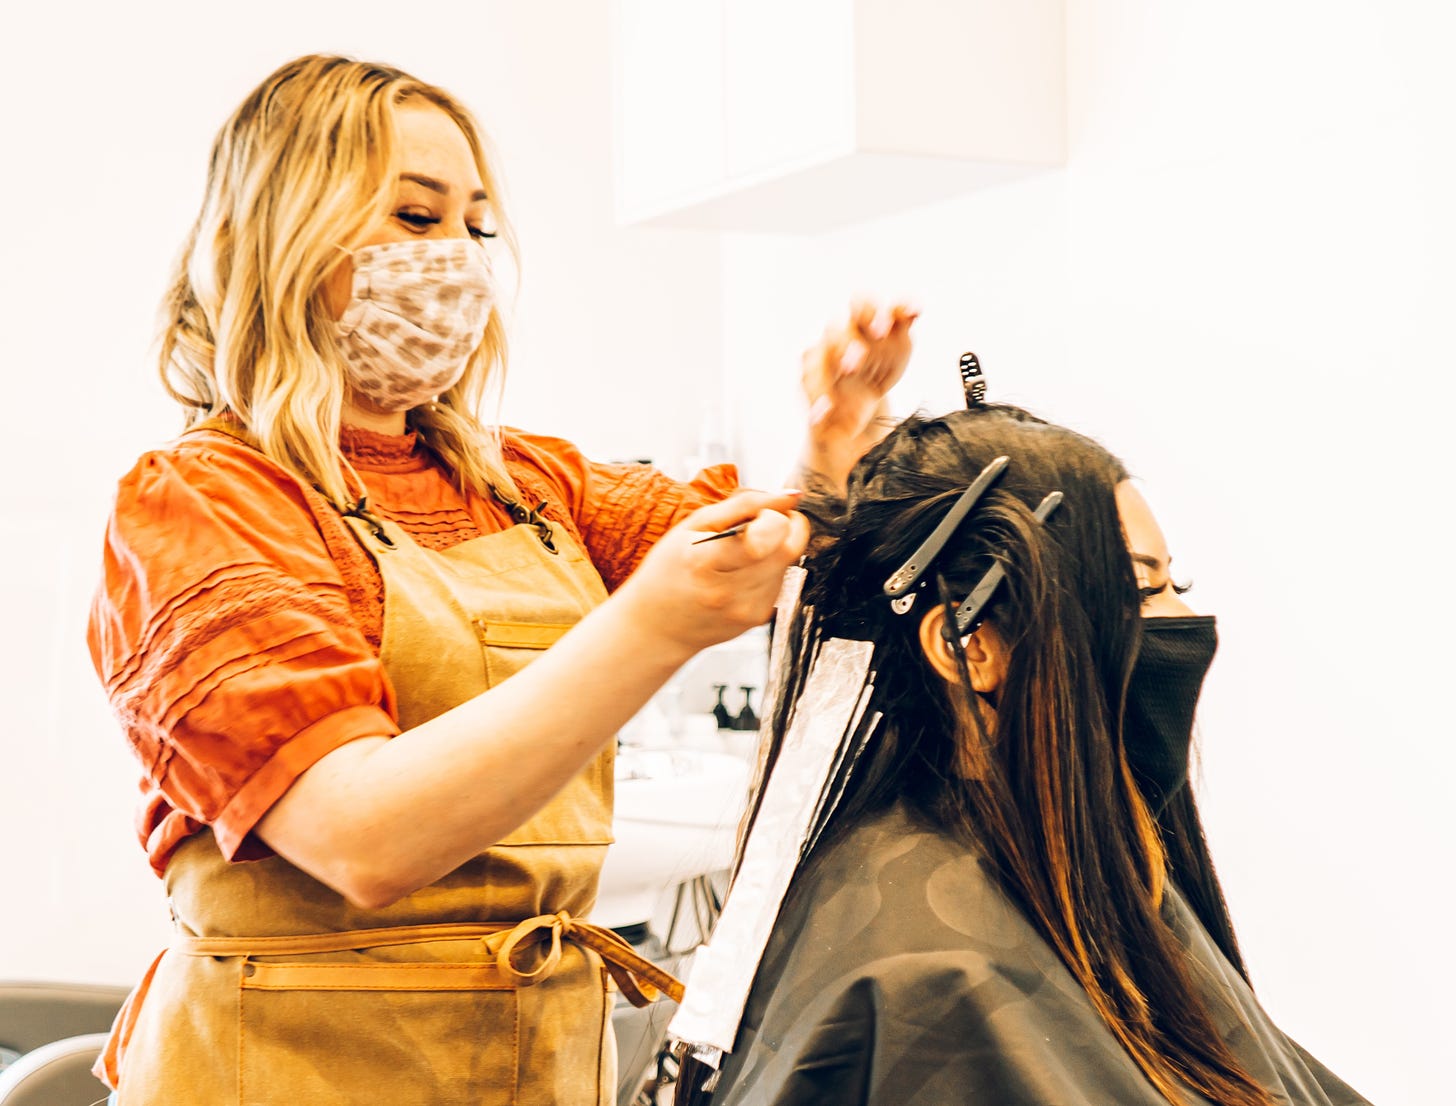 A hair salon. Photo by Oxana Melis on Unsplash